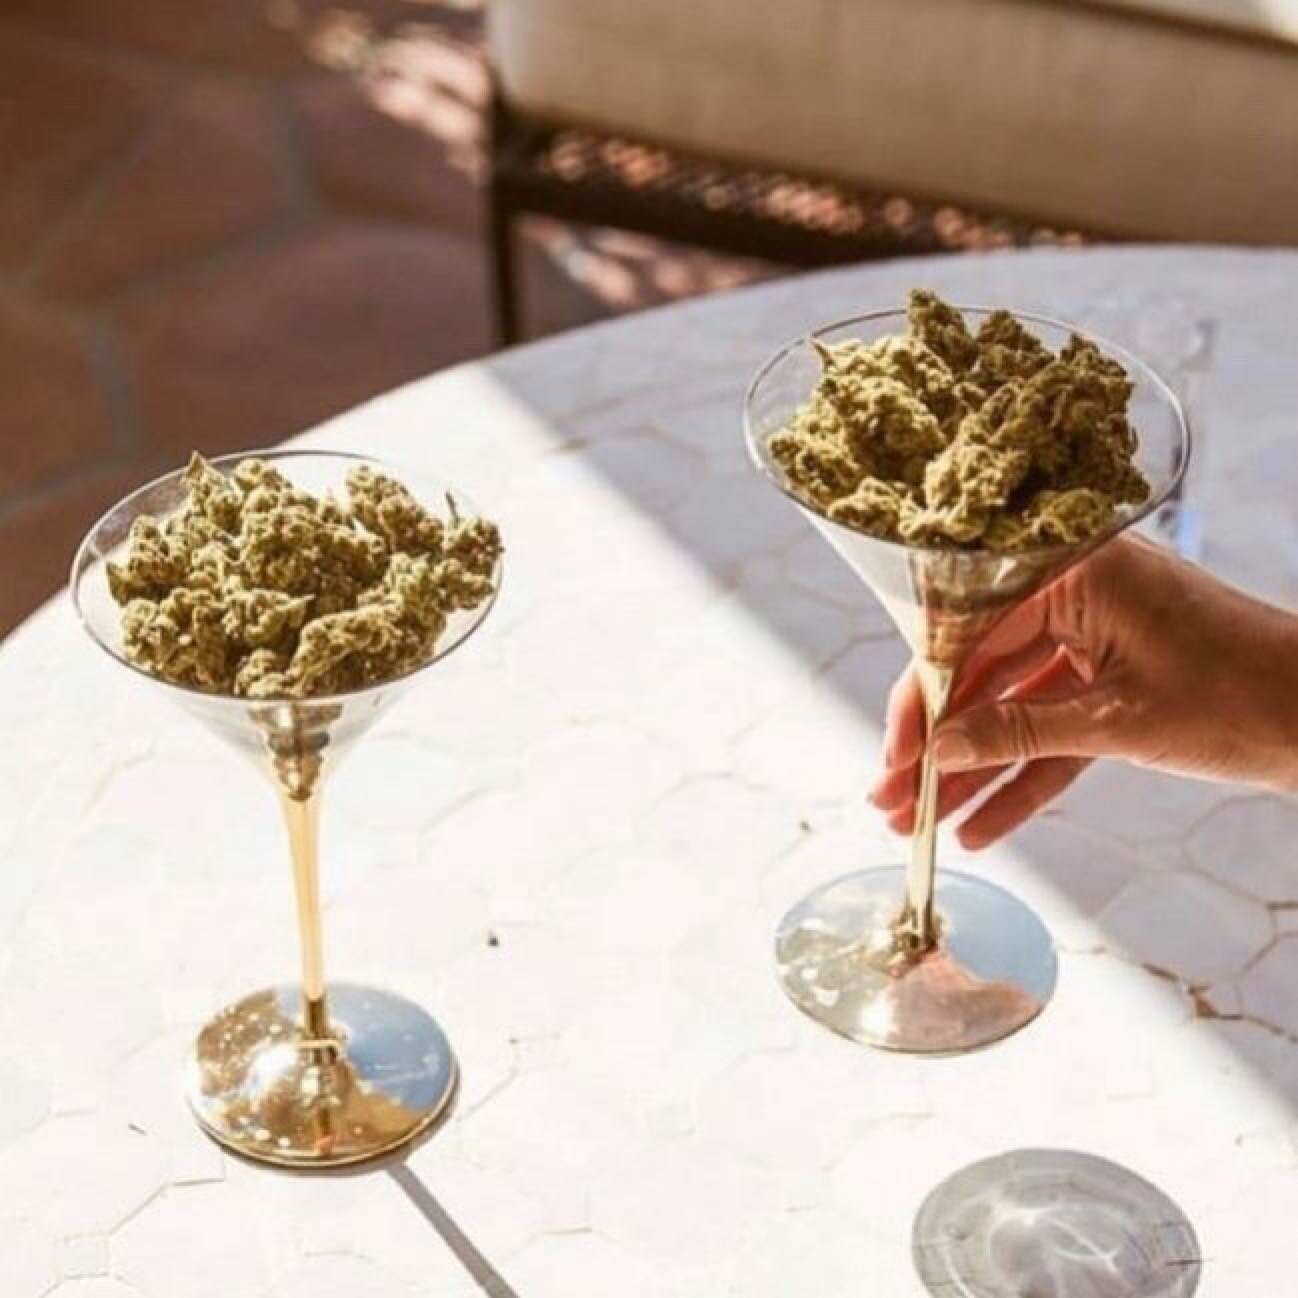 Cheers to the freakin&rsquo; weekend 🍸🌱
pc 📸: @findyouressential
#gohigher #happyfriday #legalizecannabis